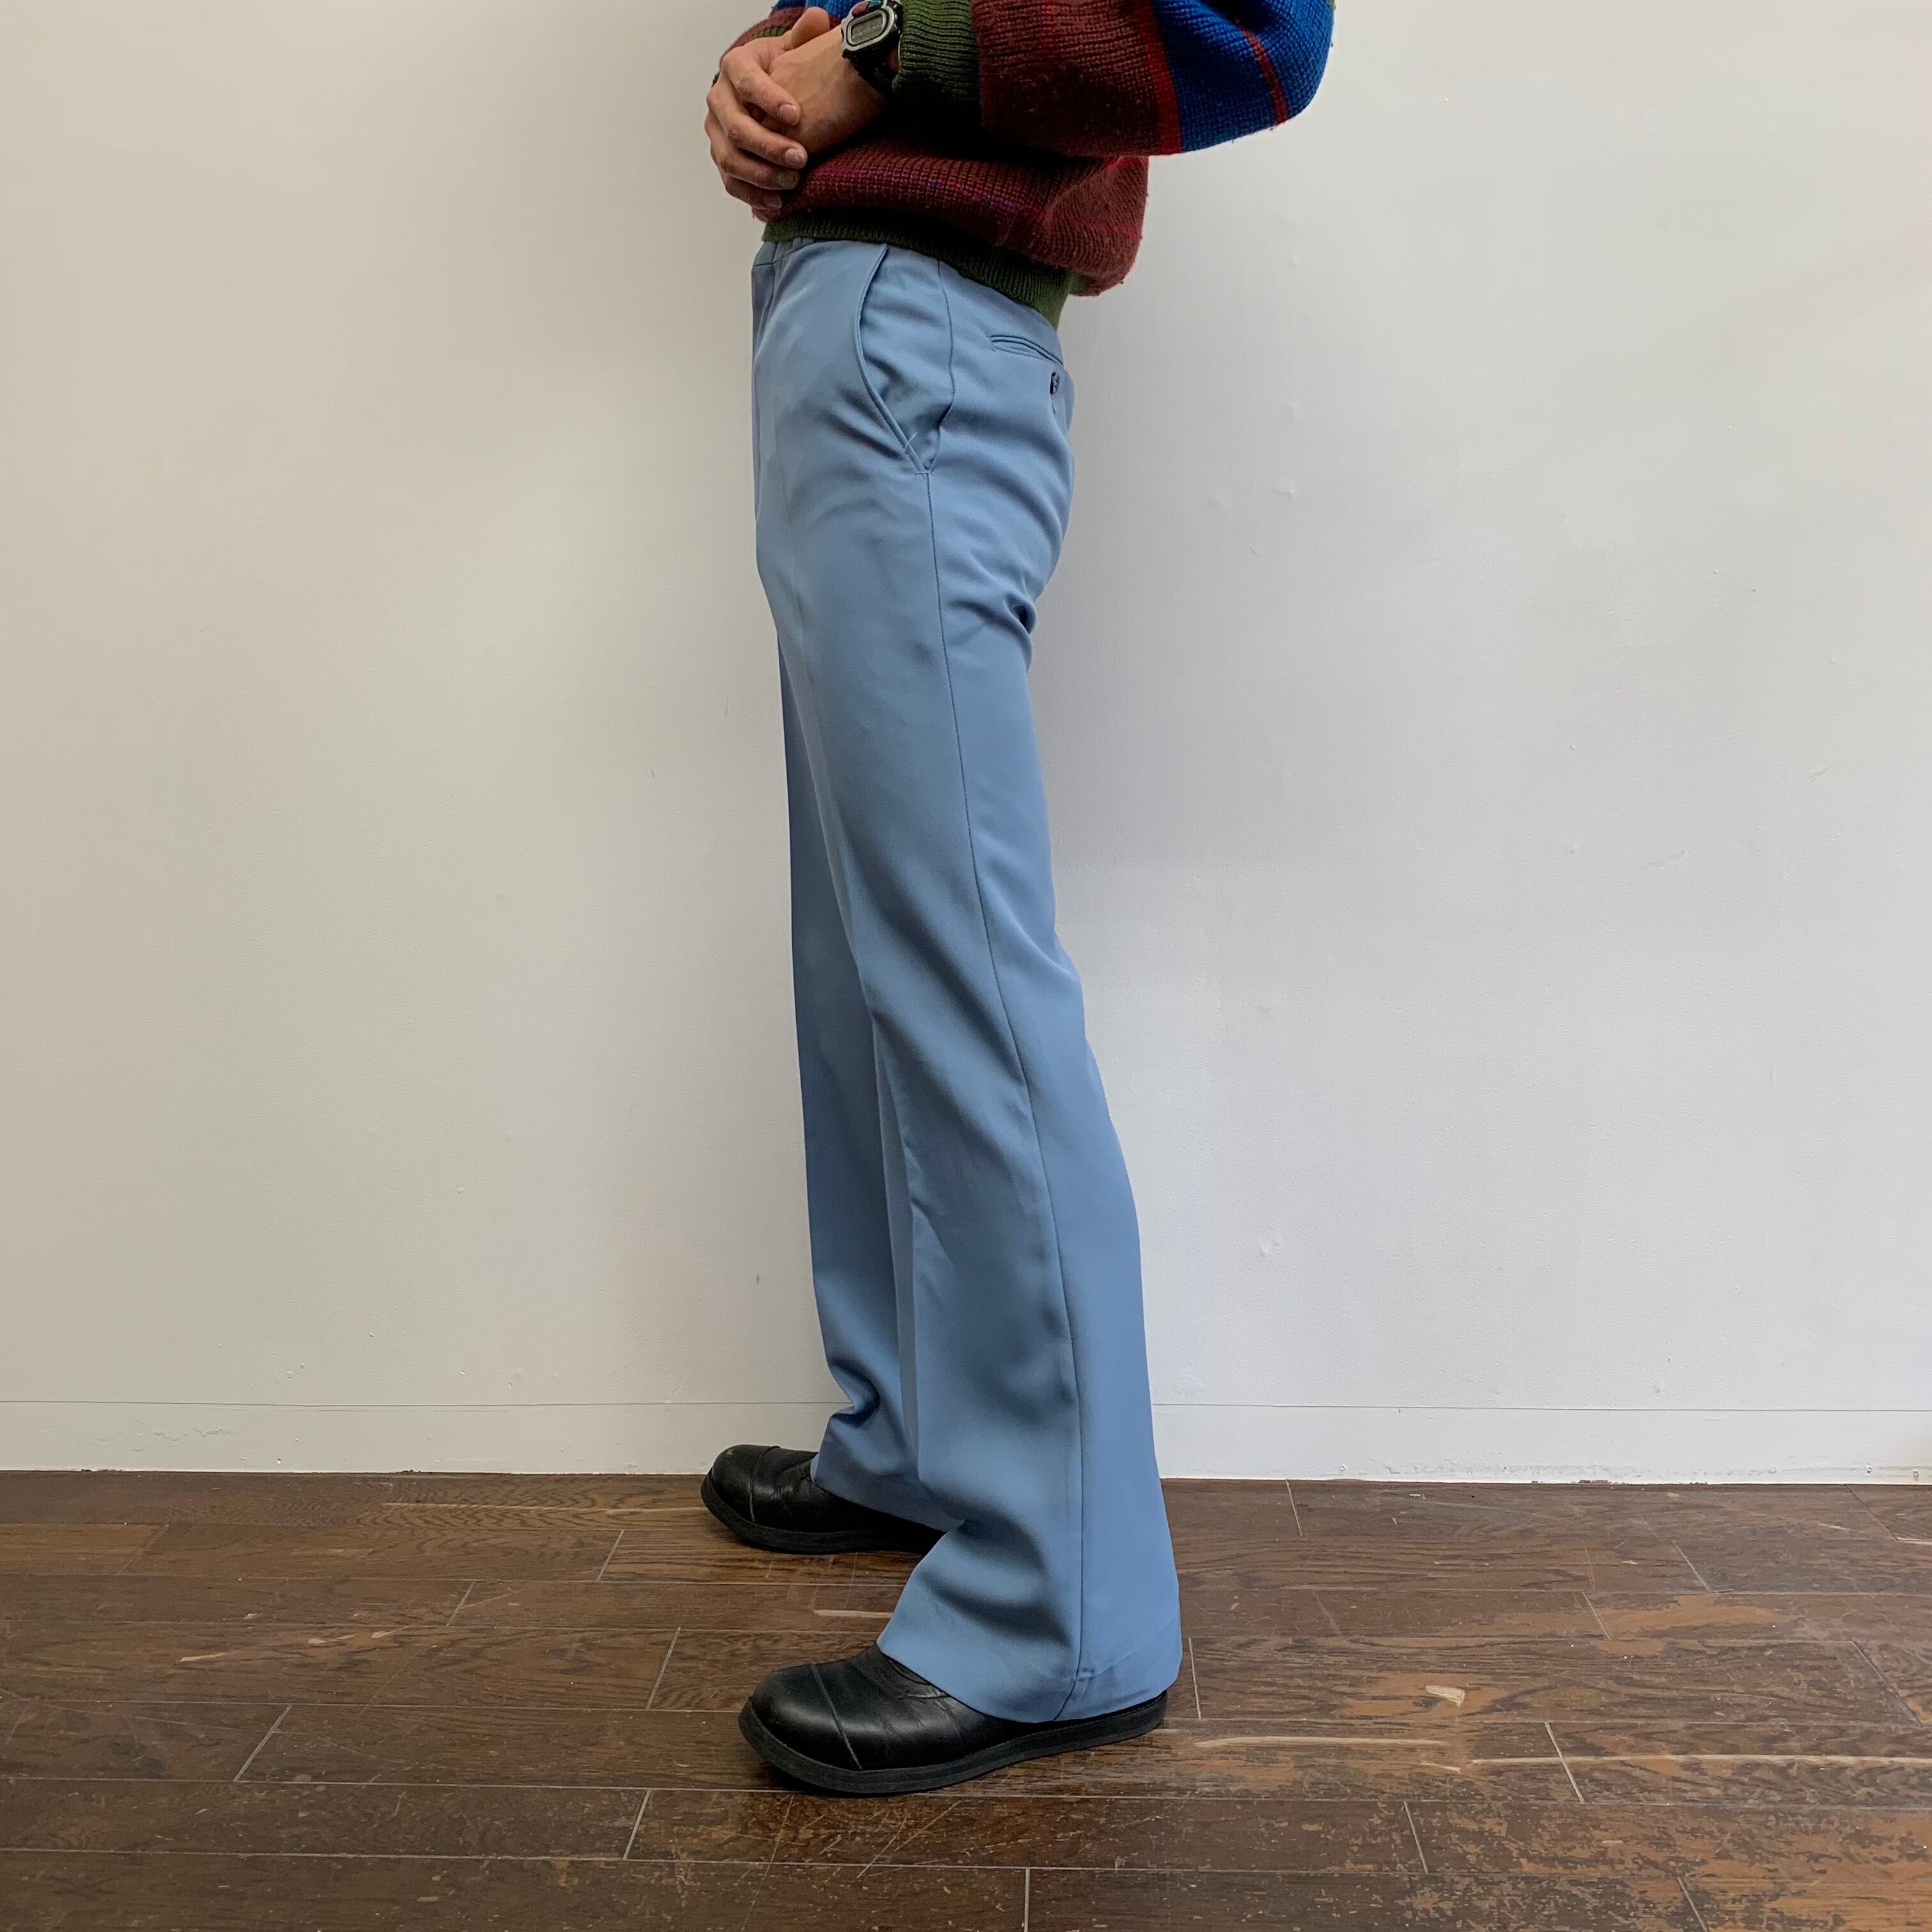 0165. 1970's poly slacks サックスブルー 水色 ポリスラックス パンツ 70s 70年代 vintage 古着